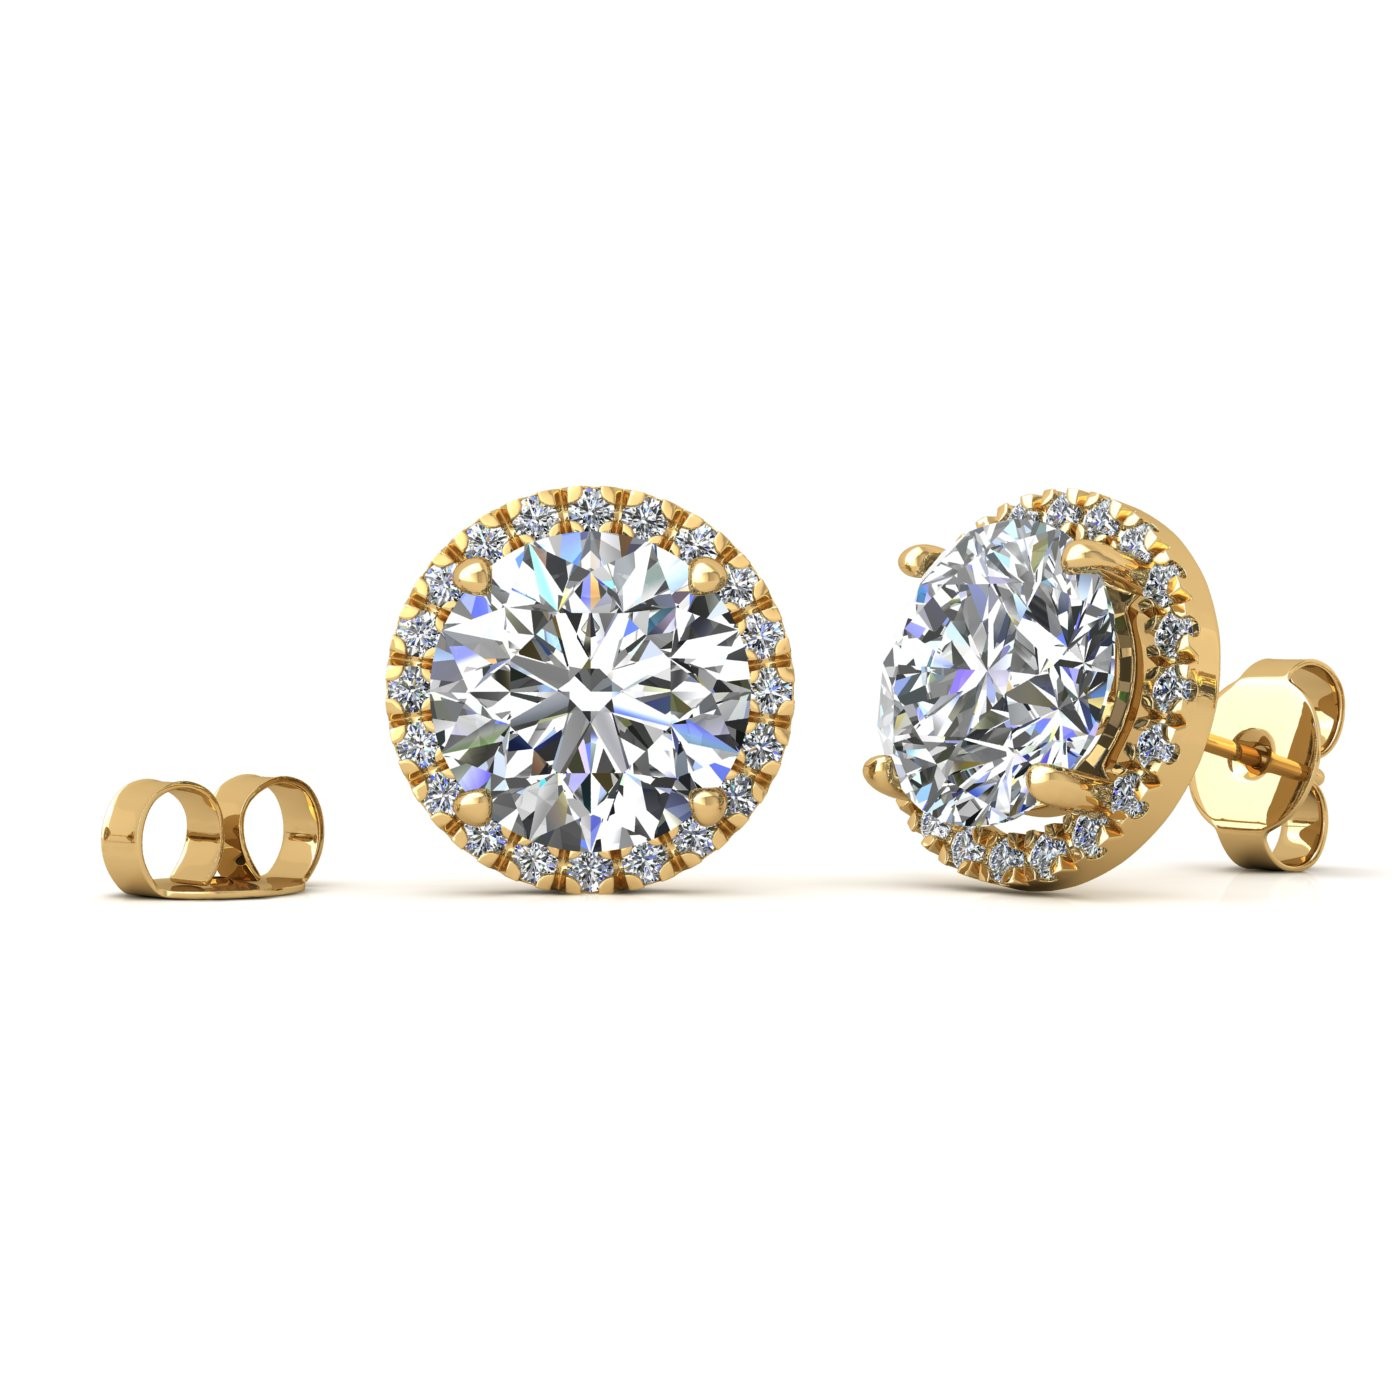 18k yellow gold  1 ct each (2,0 tcw) 4 prongs round shape diamond earrings with diamond pavÉ set halo Photos & images